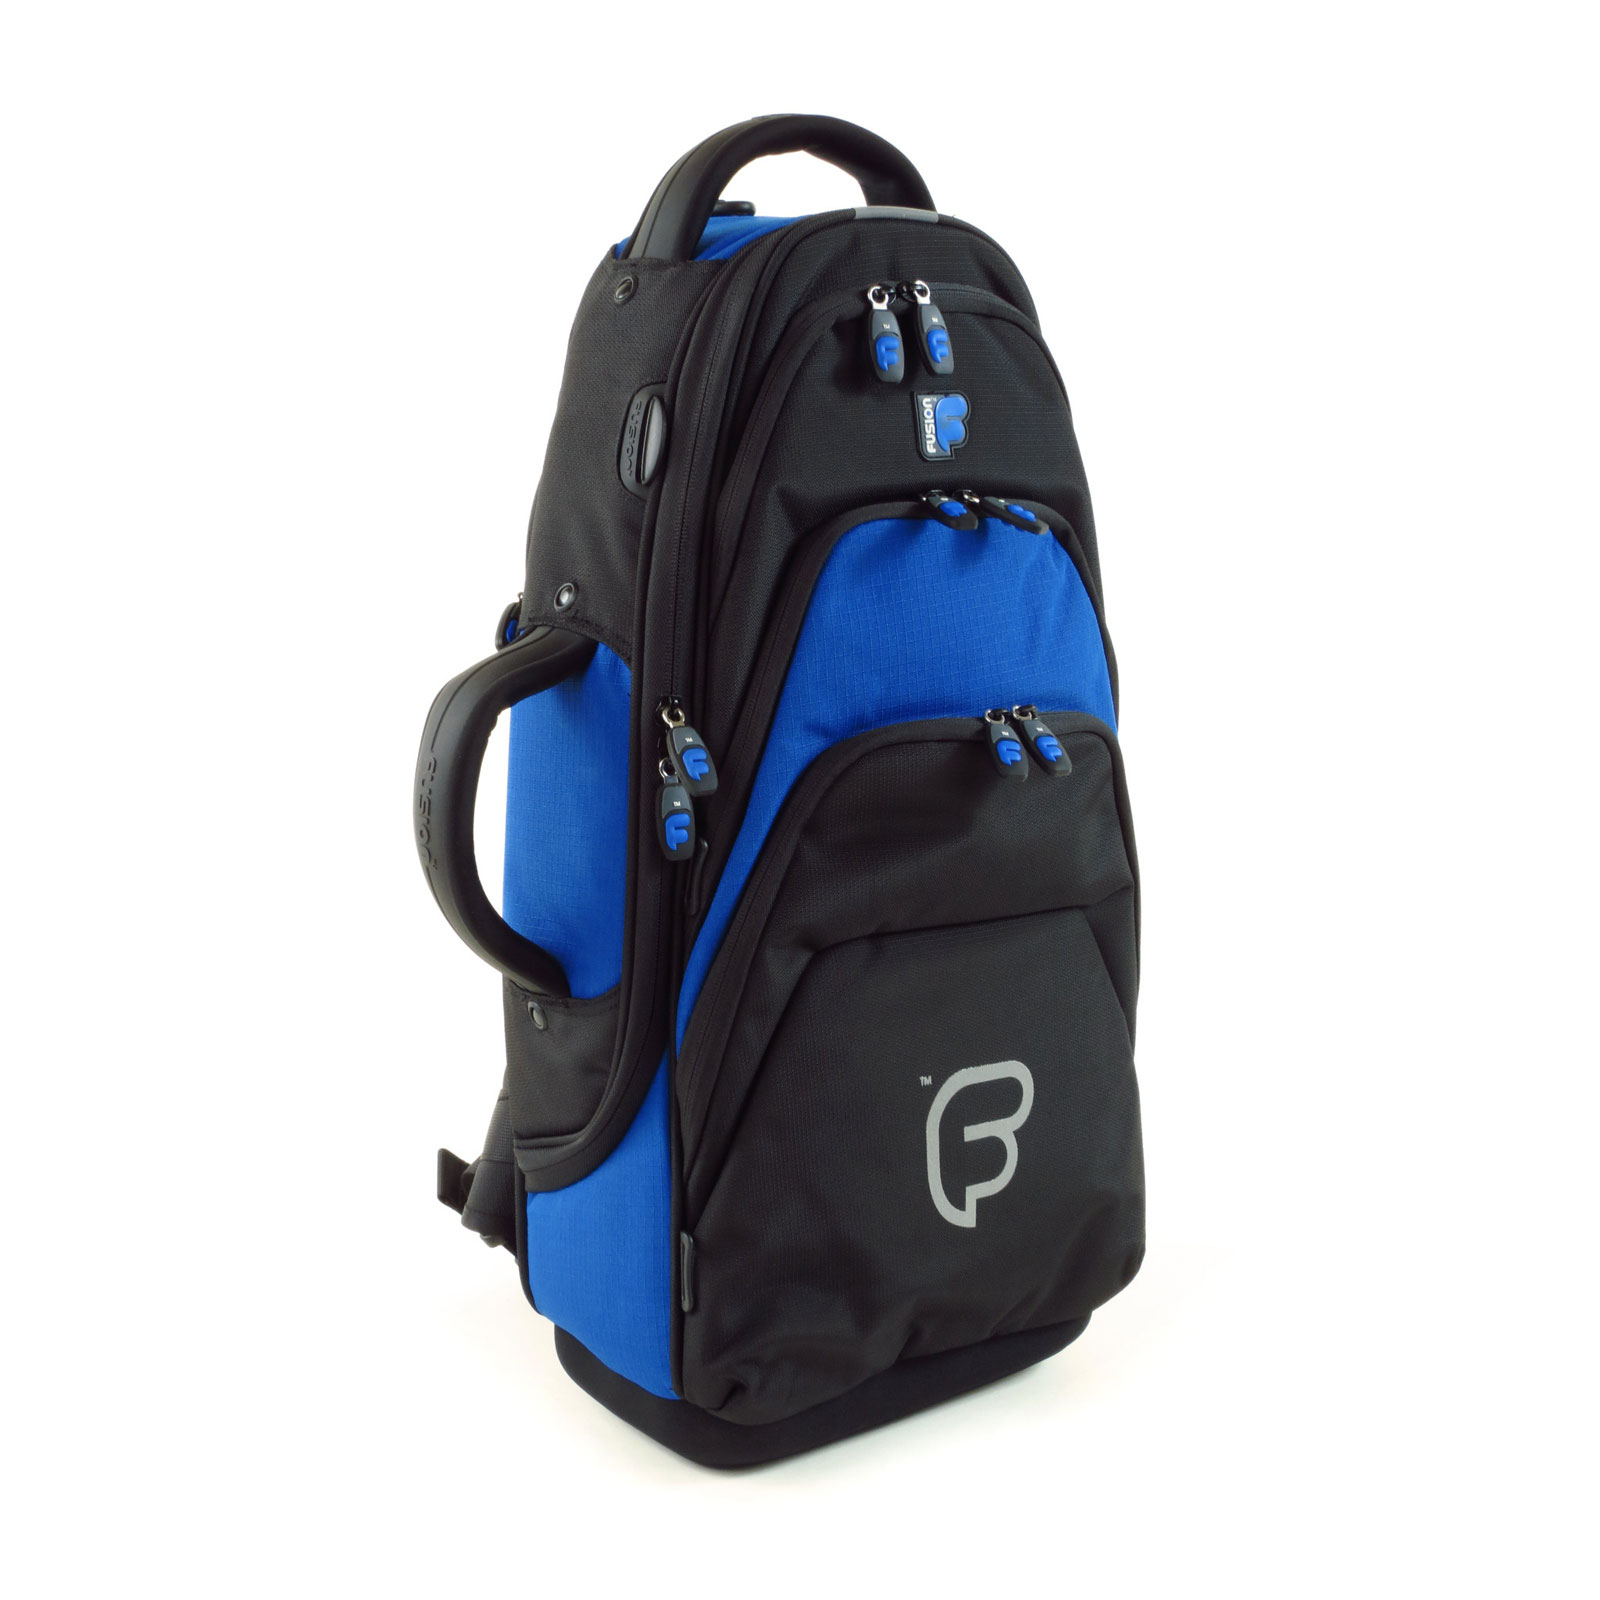 FUSION BAGS BAG TRUMPET BLACK AND BLUE PB-04-B 